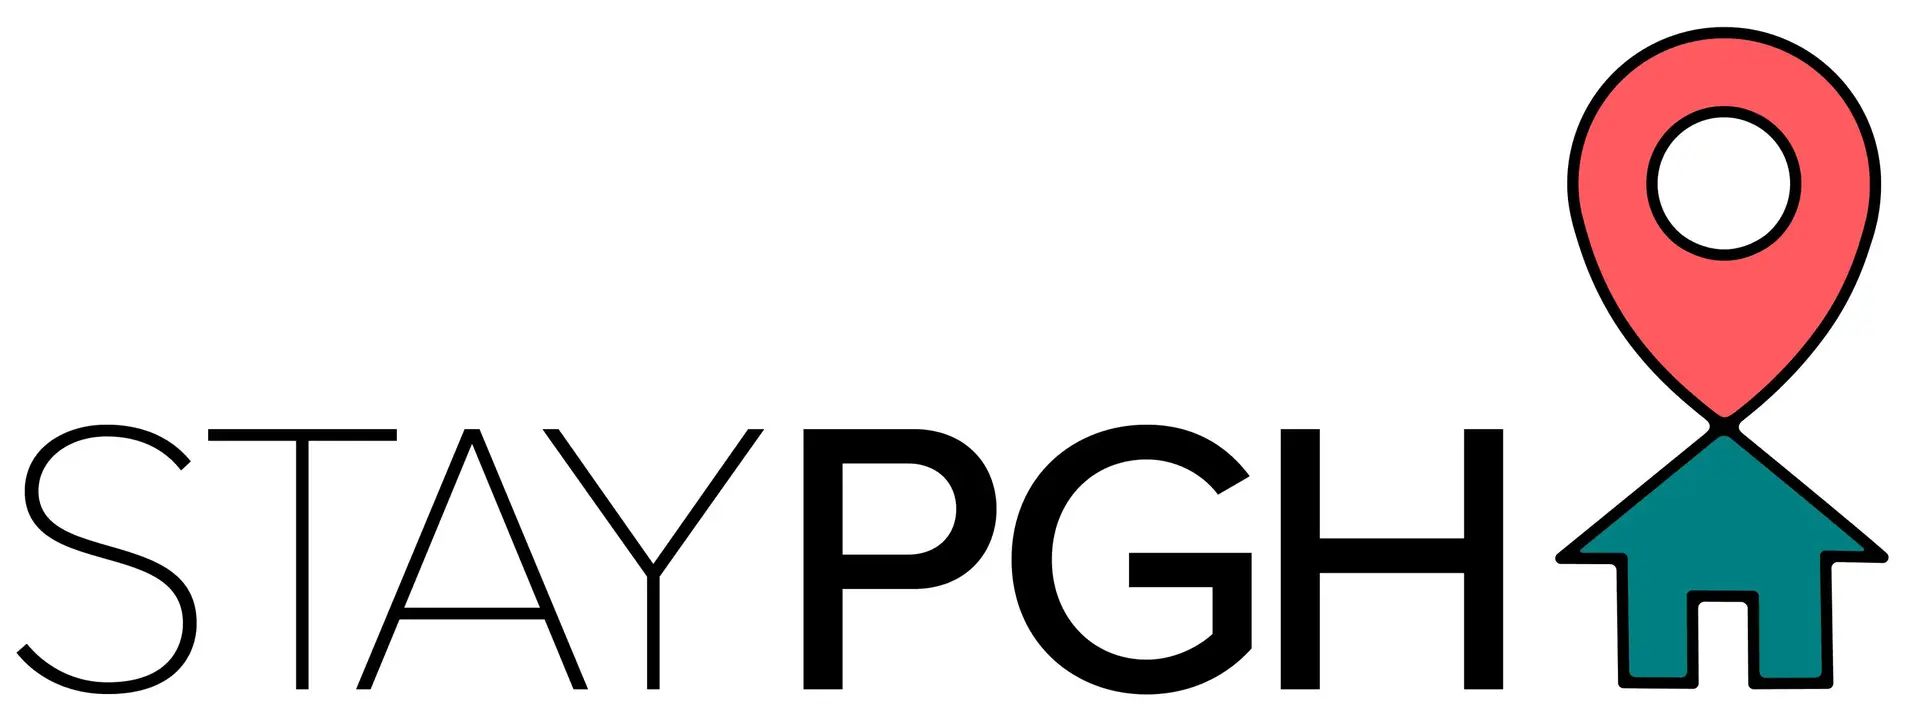 stay_pittsburgh logo